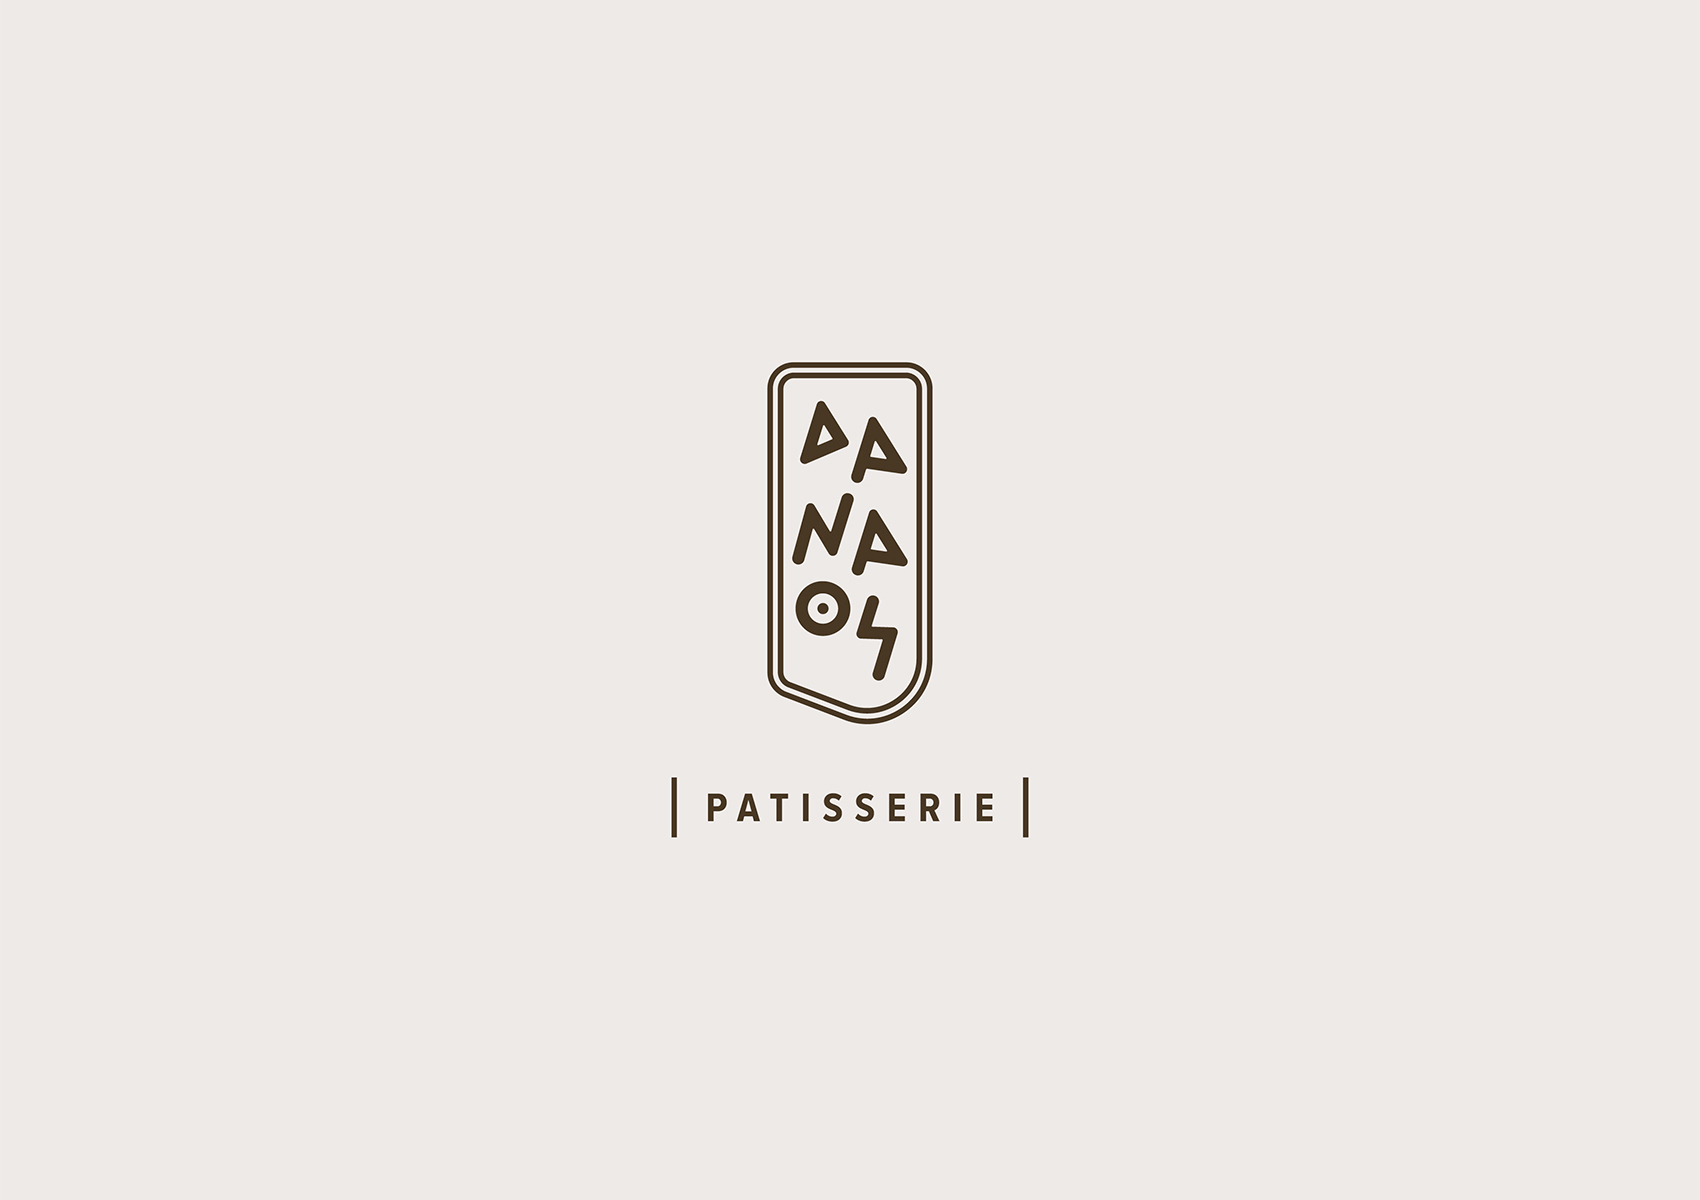 Danaos Patisserie logo 1700x1200 by xhristakis